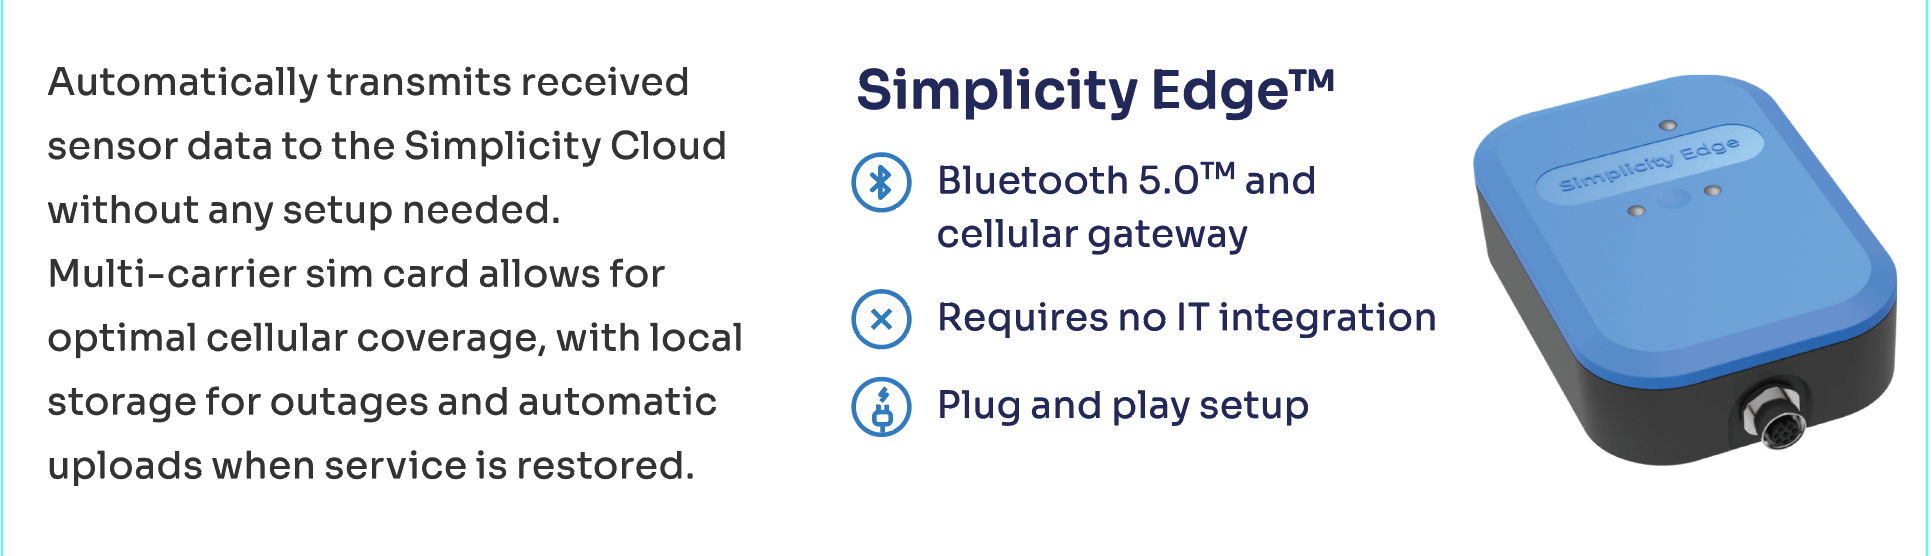 simplicity-edge